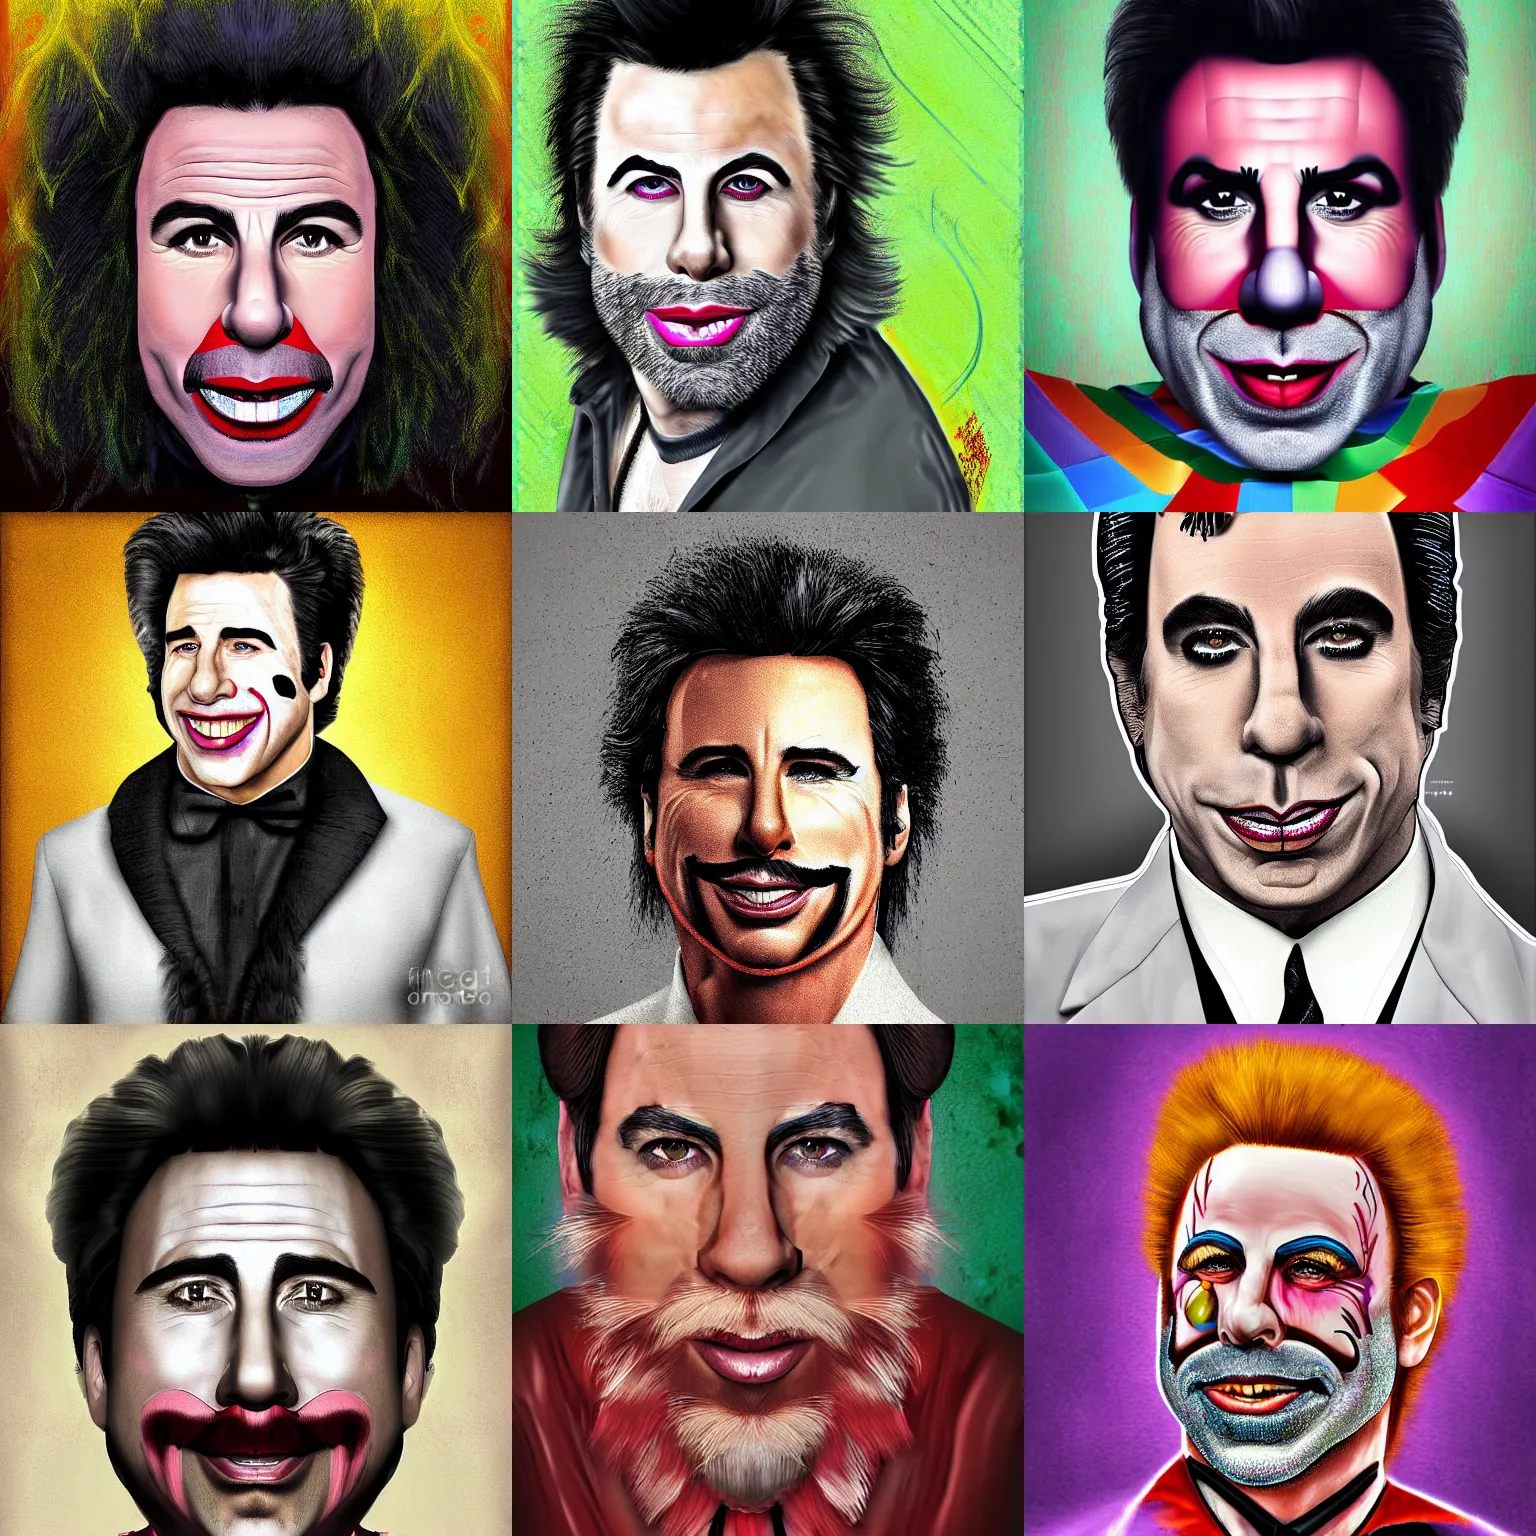 Prompt: john travolta is a hairy clown digital art, studio, detailed portrait